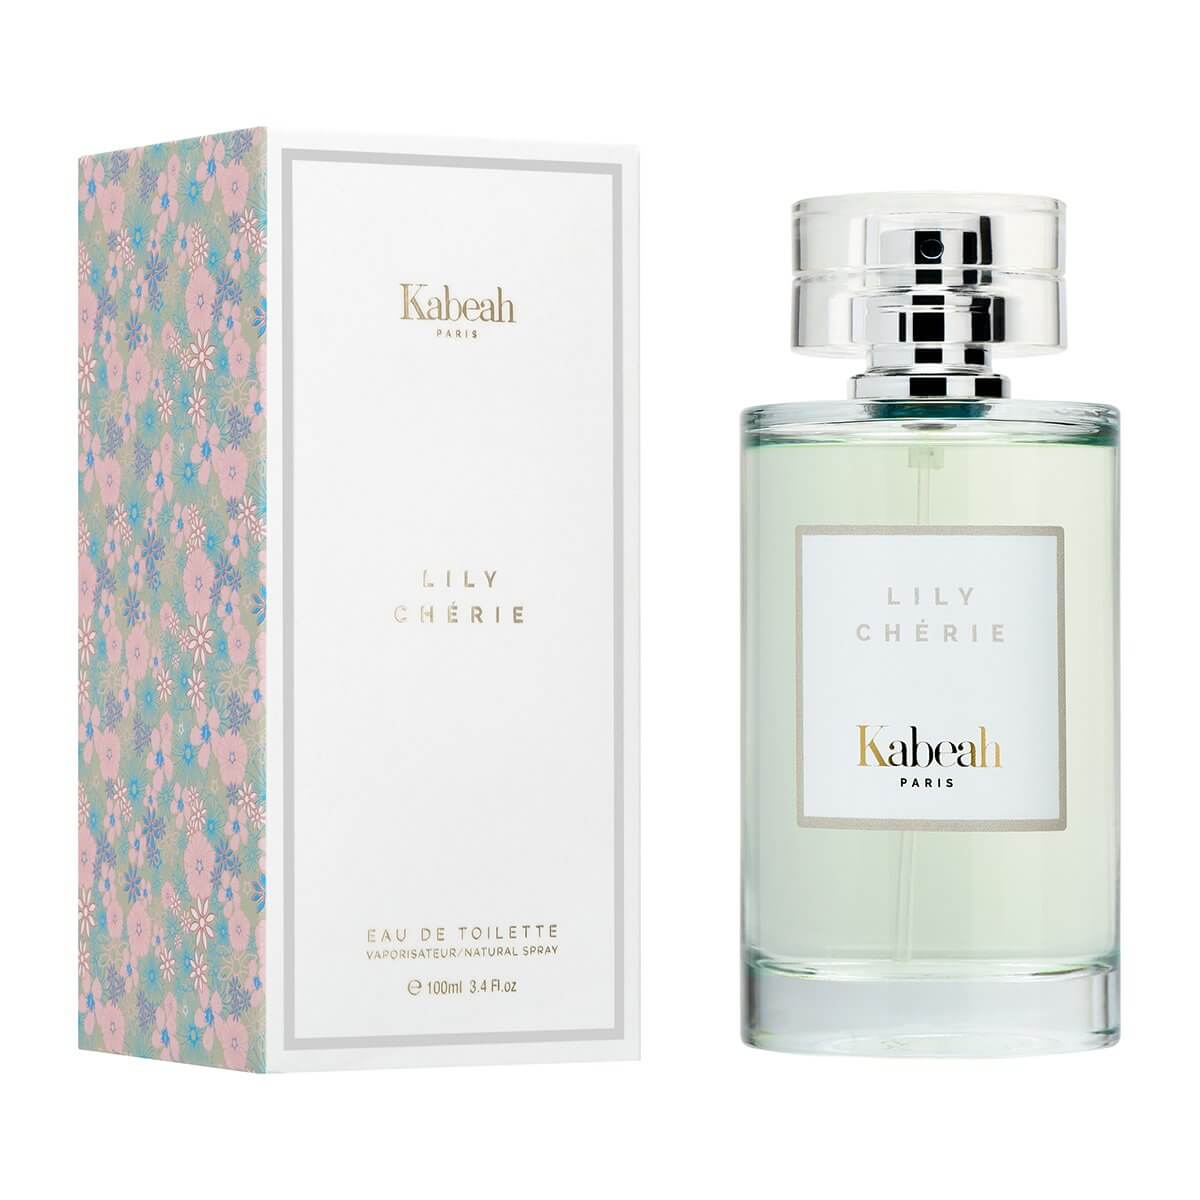 Lily Cherie by Kabeah 100 ml. at Indigo Perfumery